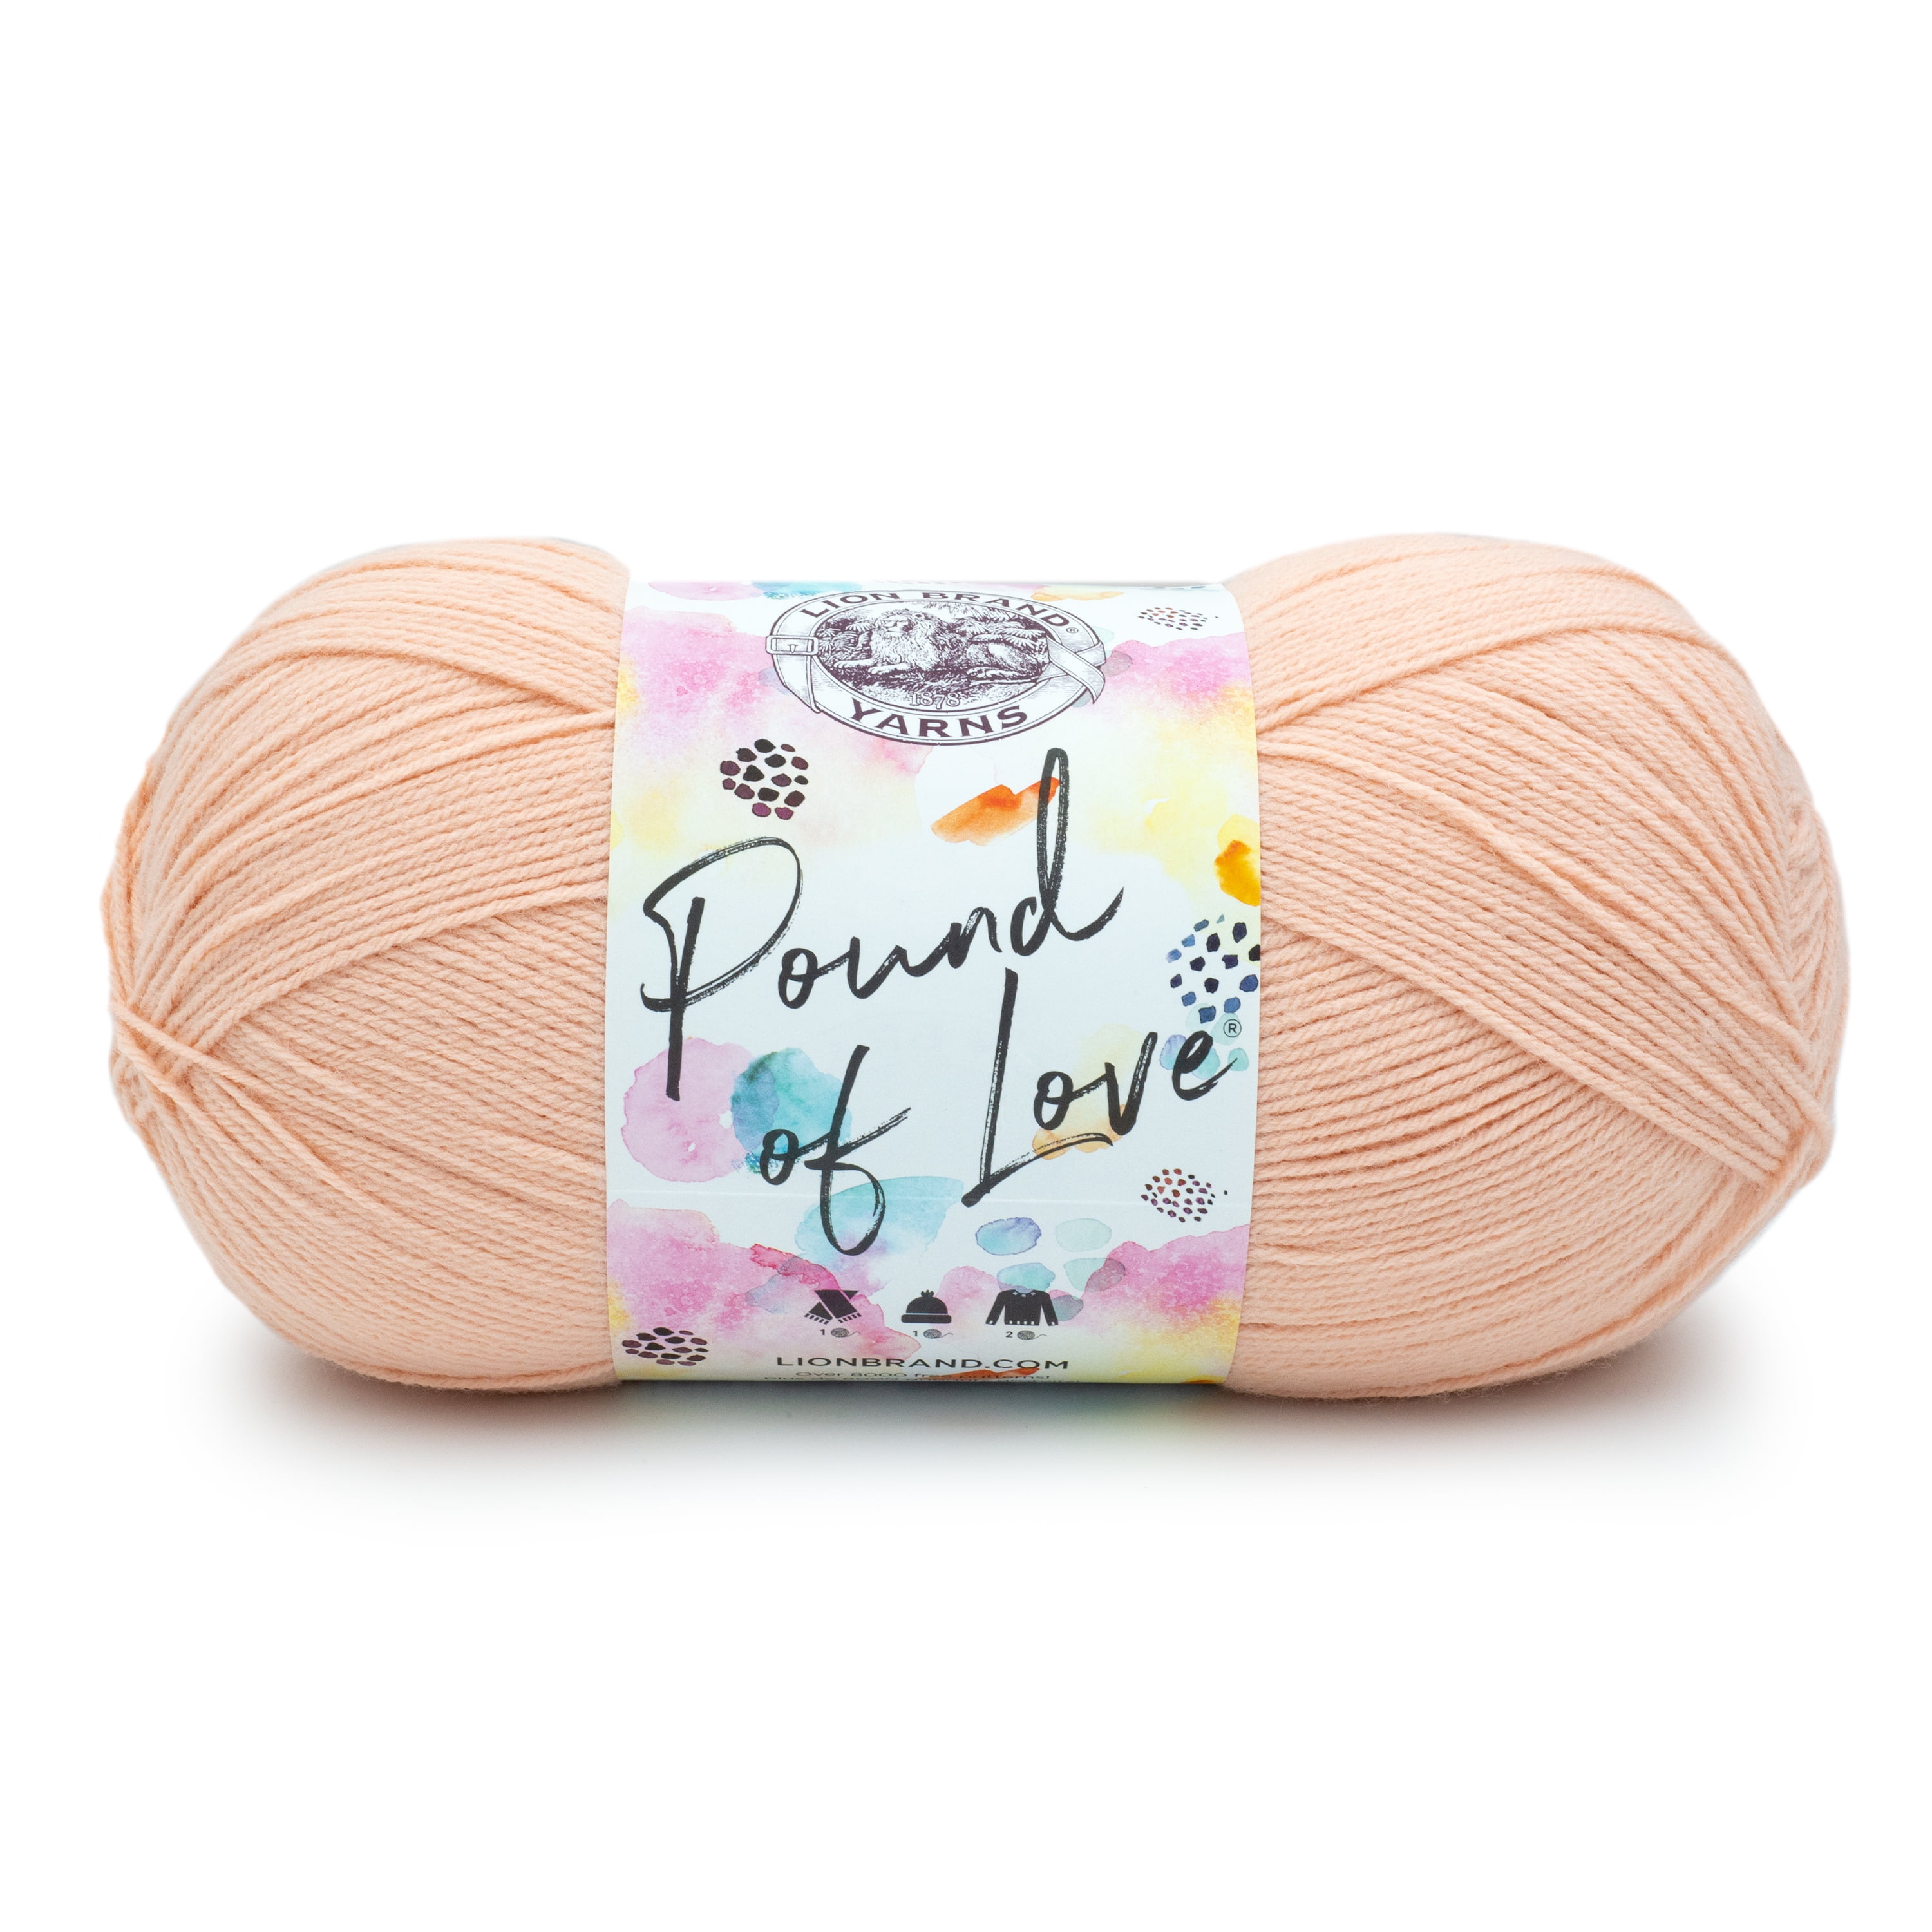 Lion Brand Yarn Pound of Love, Value Yarn, Large Yarn for Knitting and  Crocheting, Craft Yarn, Olive